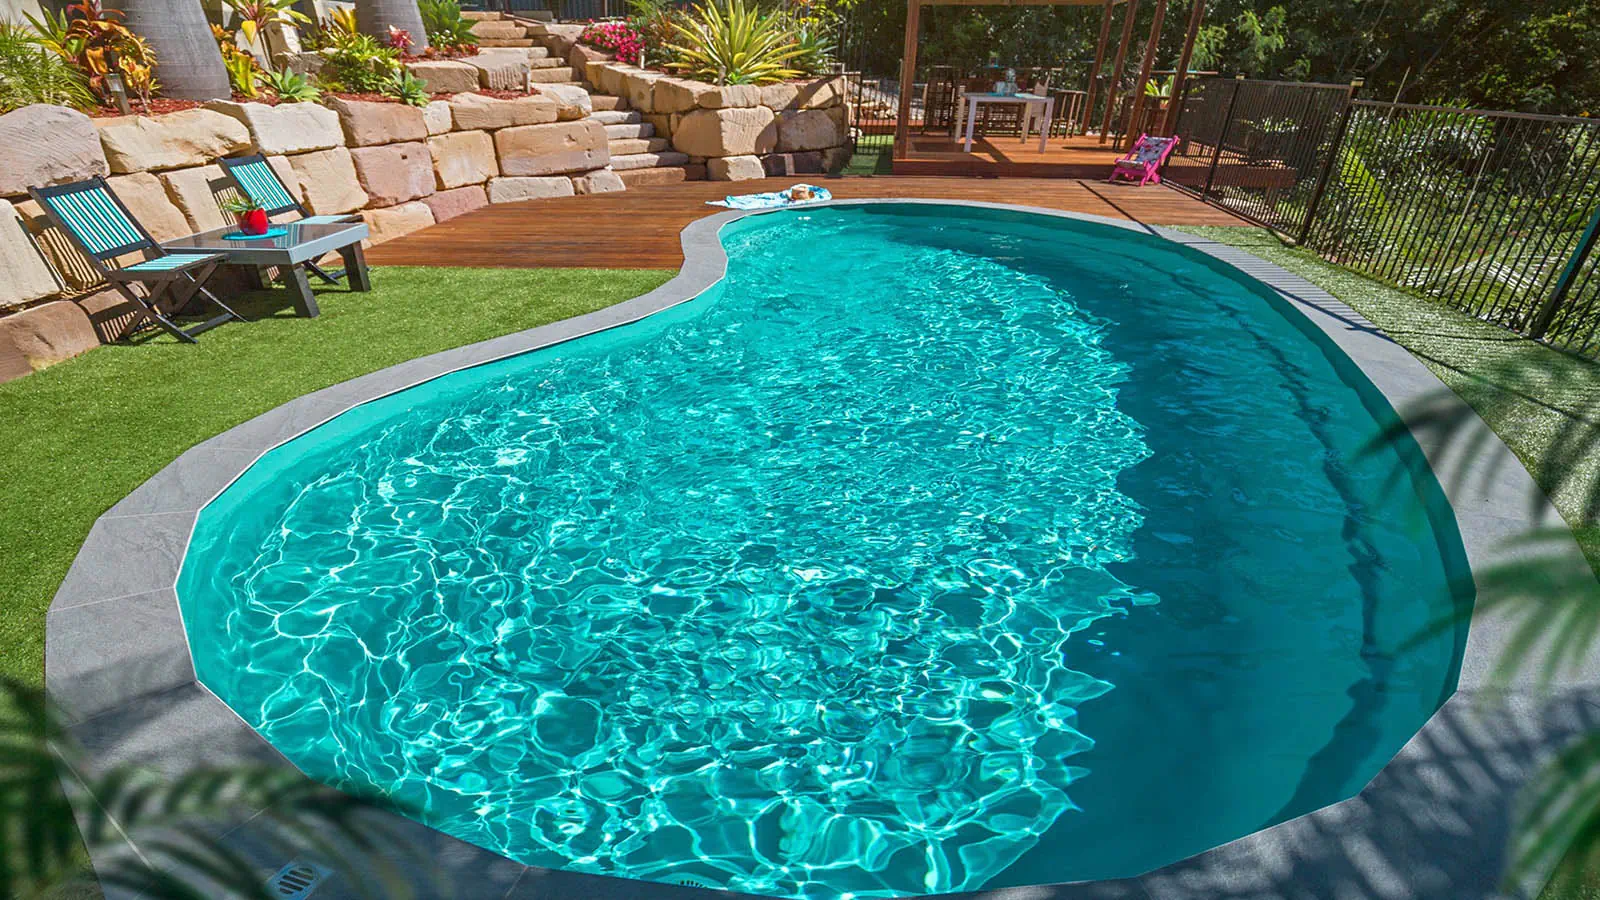 A Leisure Pools backyard pool in Aquamarine color